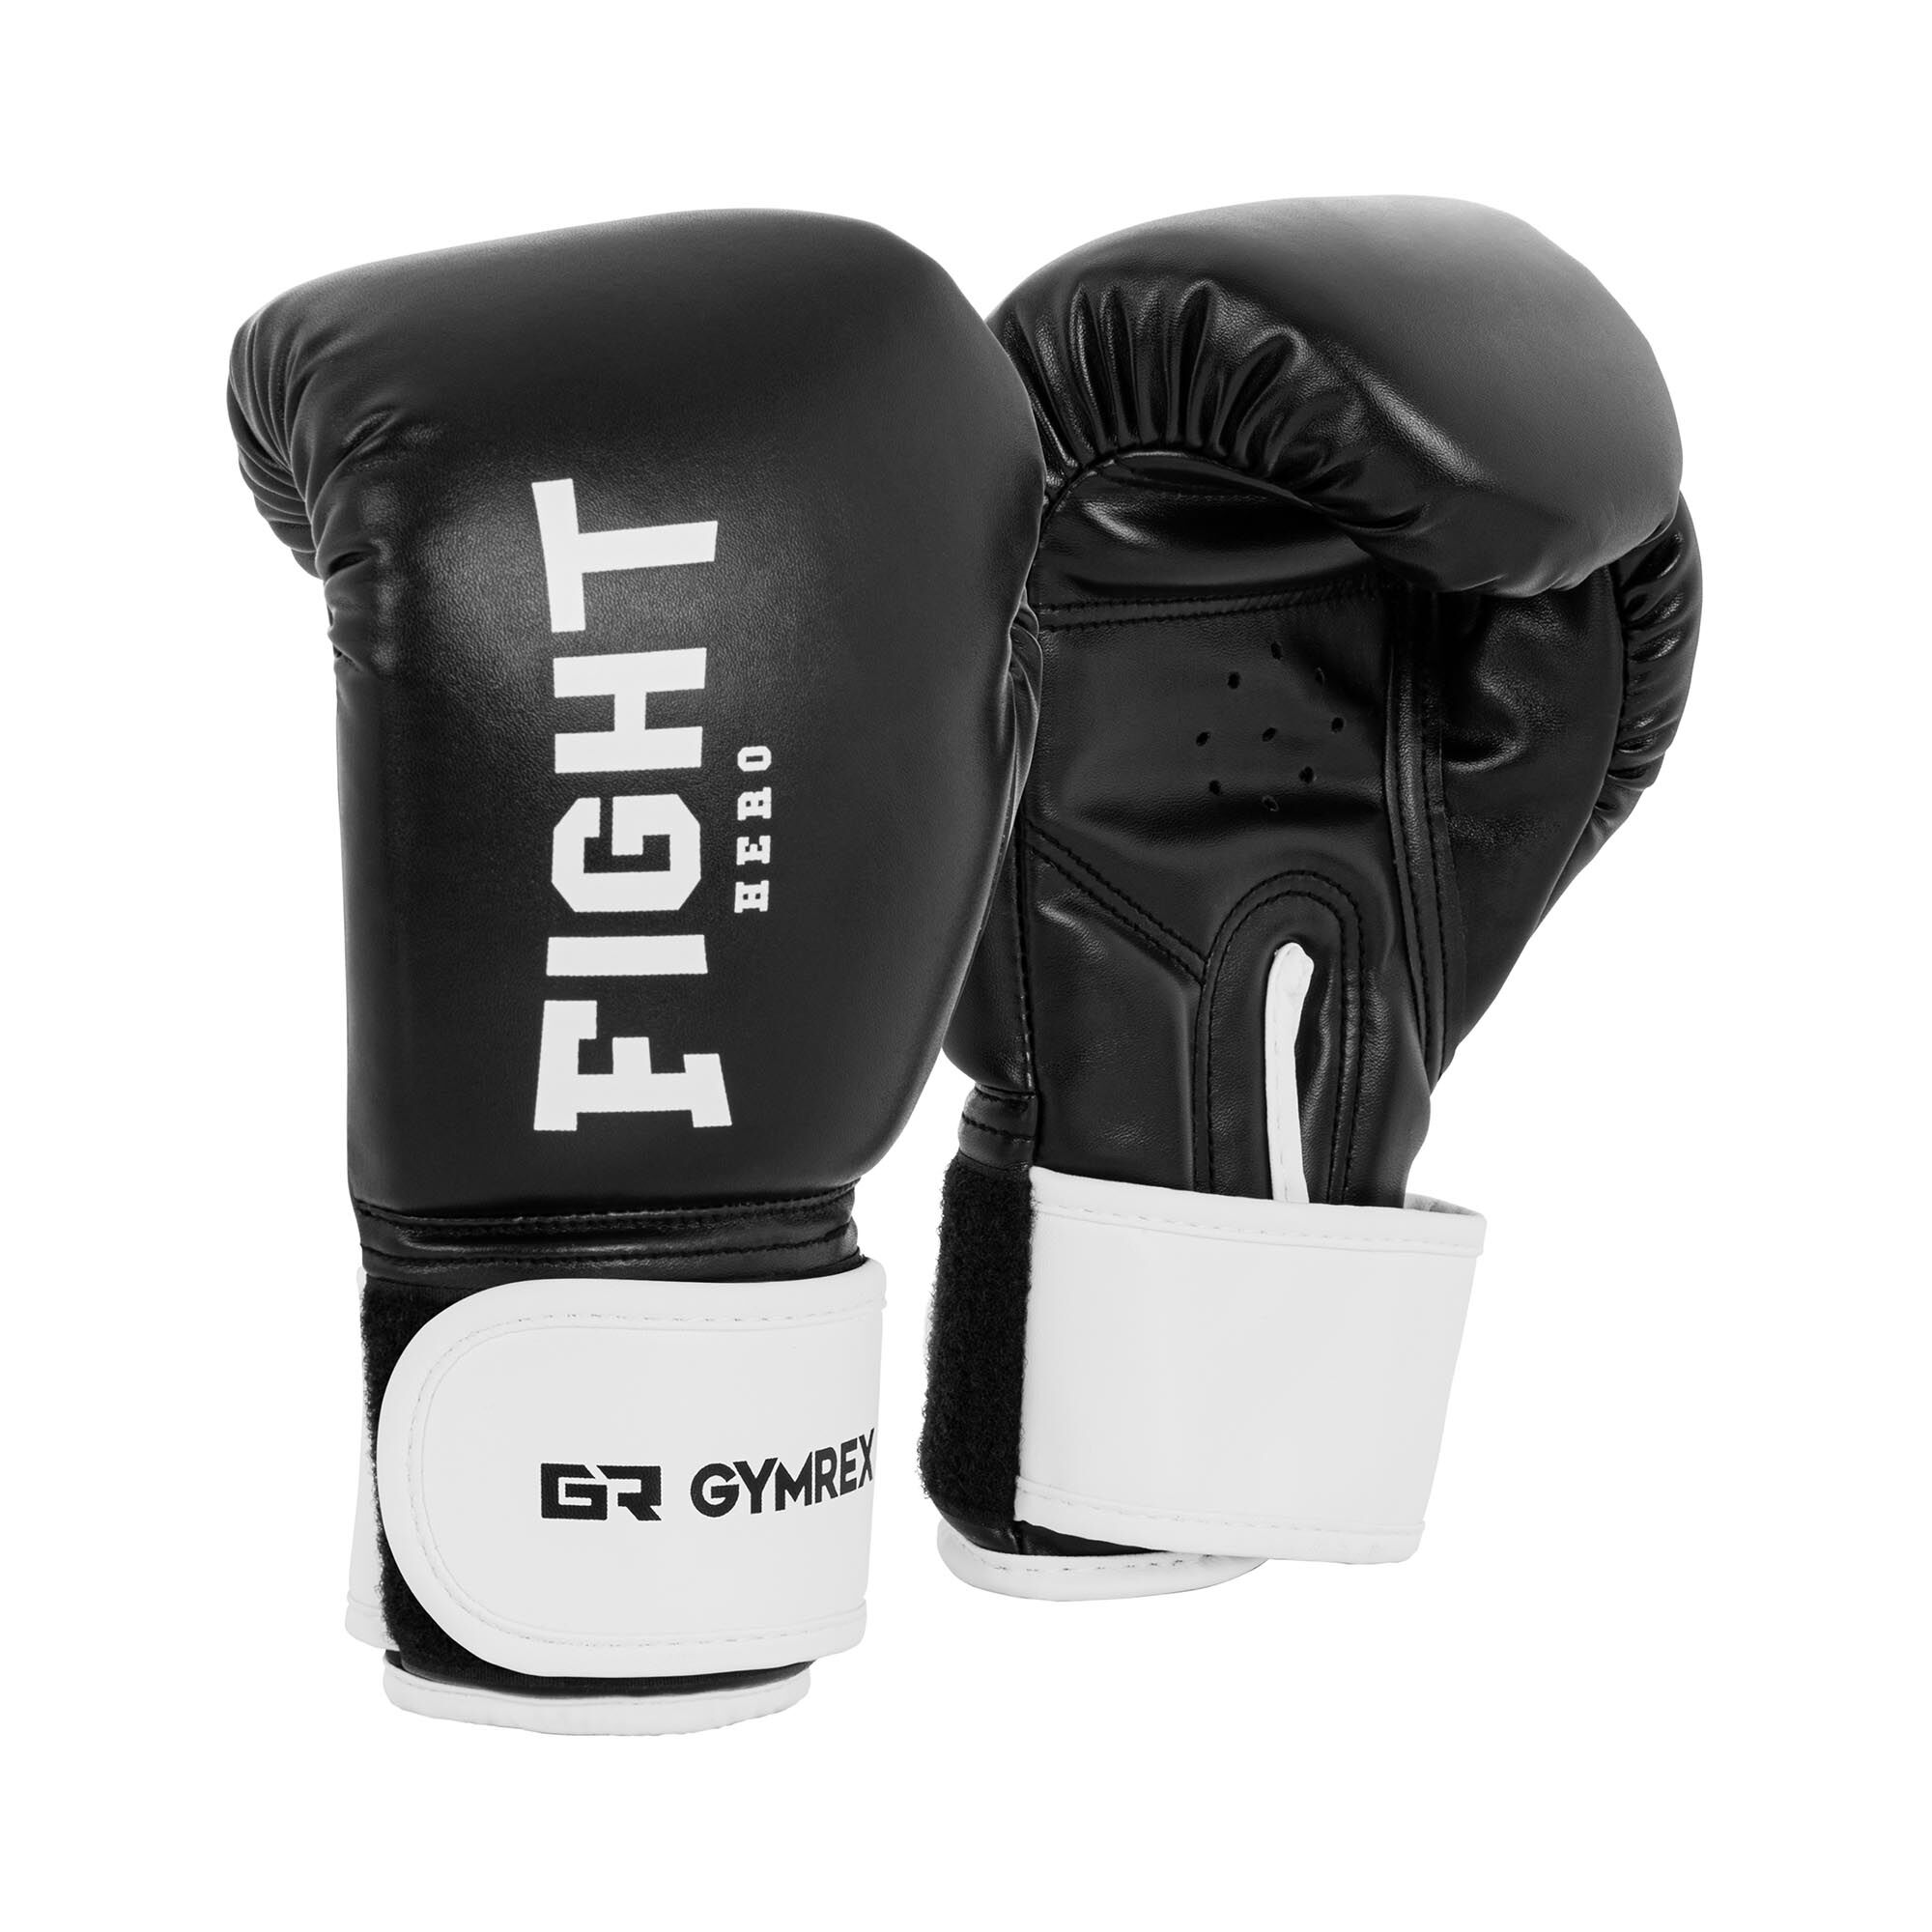 Gymrex Kids Boxing Gloves - 6 oz - black